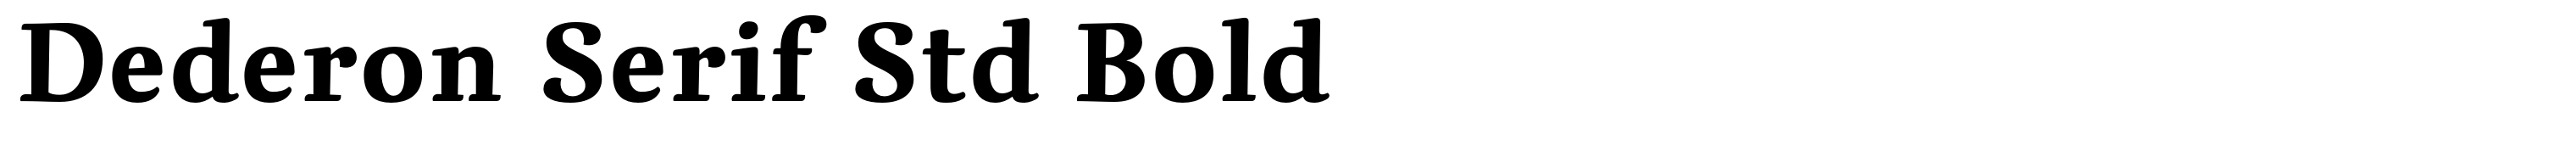 Dederon Serif Std Bold